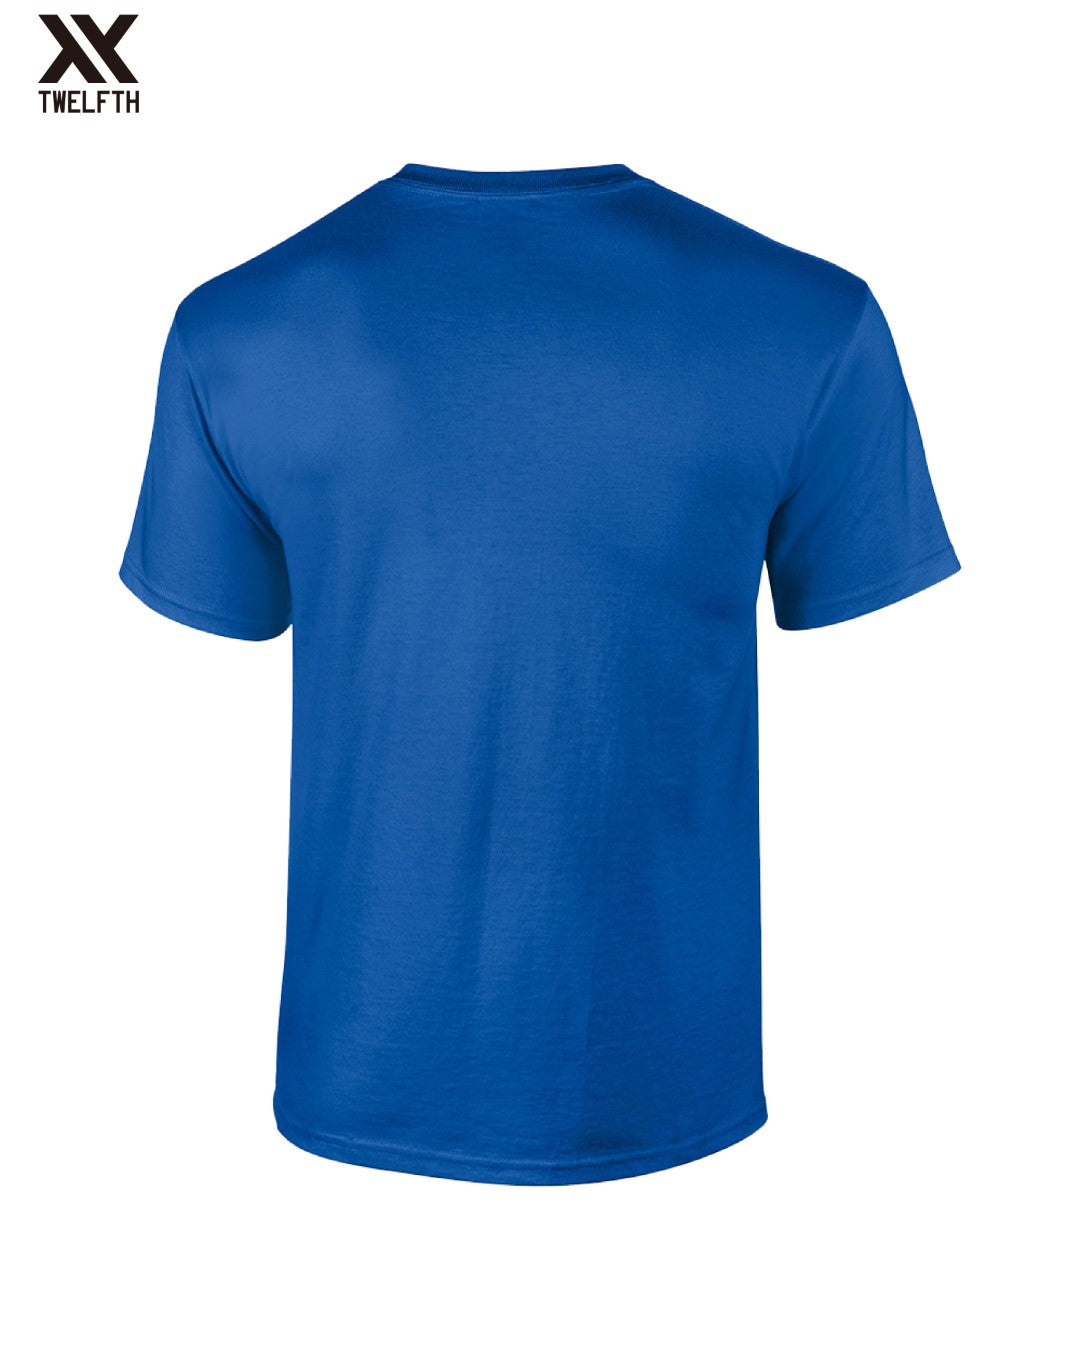 Leicester City Crest T-Shirt - Mens